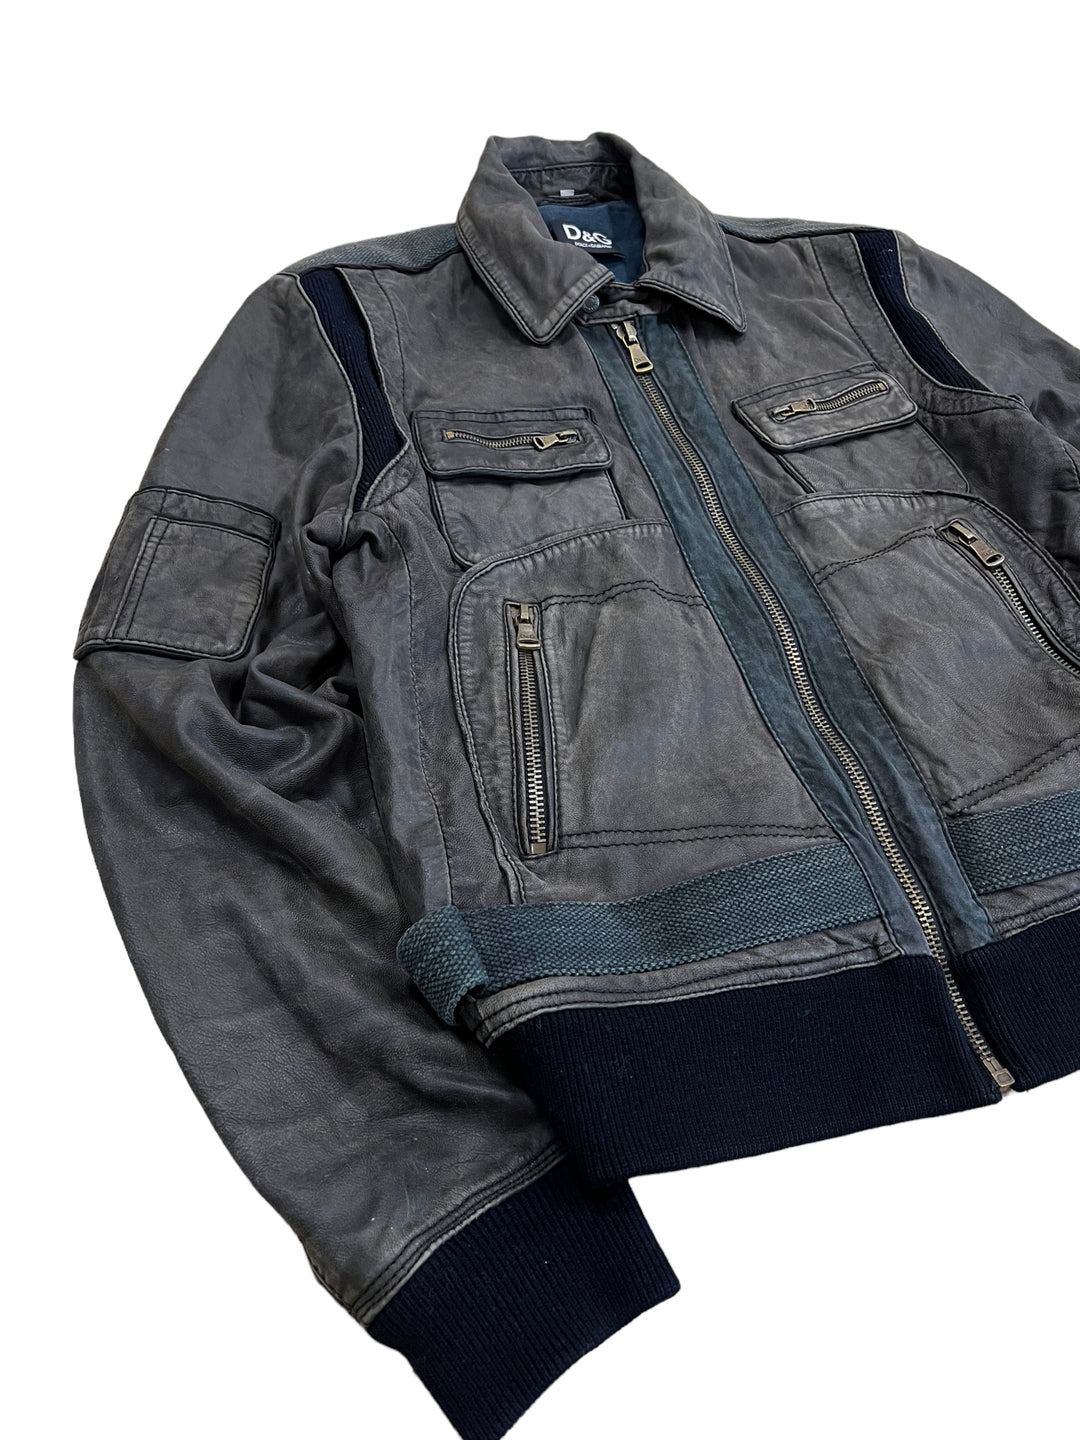 Dolce & Gabbana vintage leather bomber jacket Men’s medium